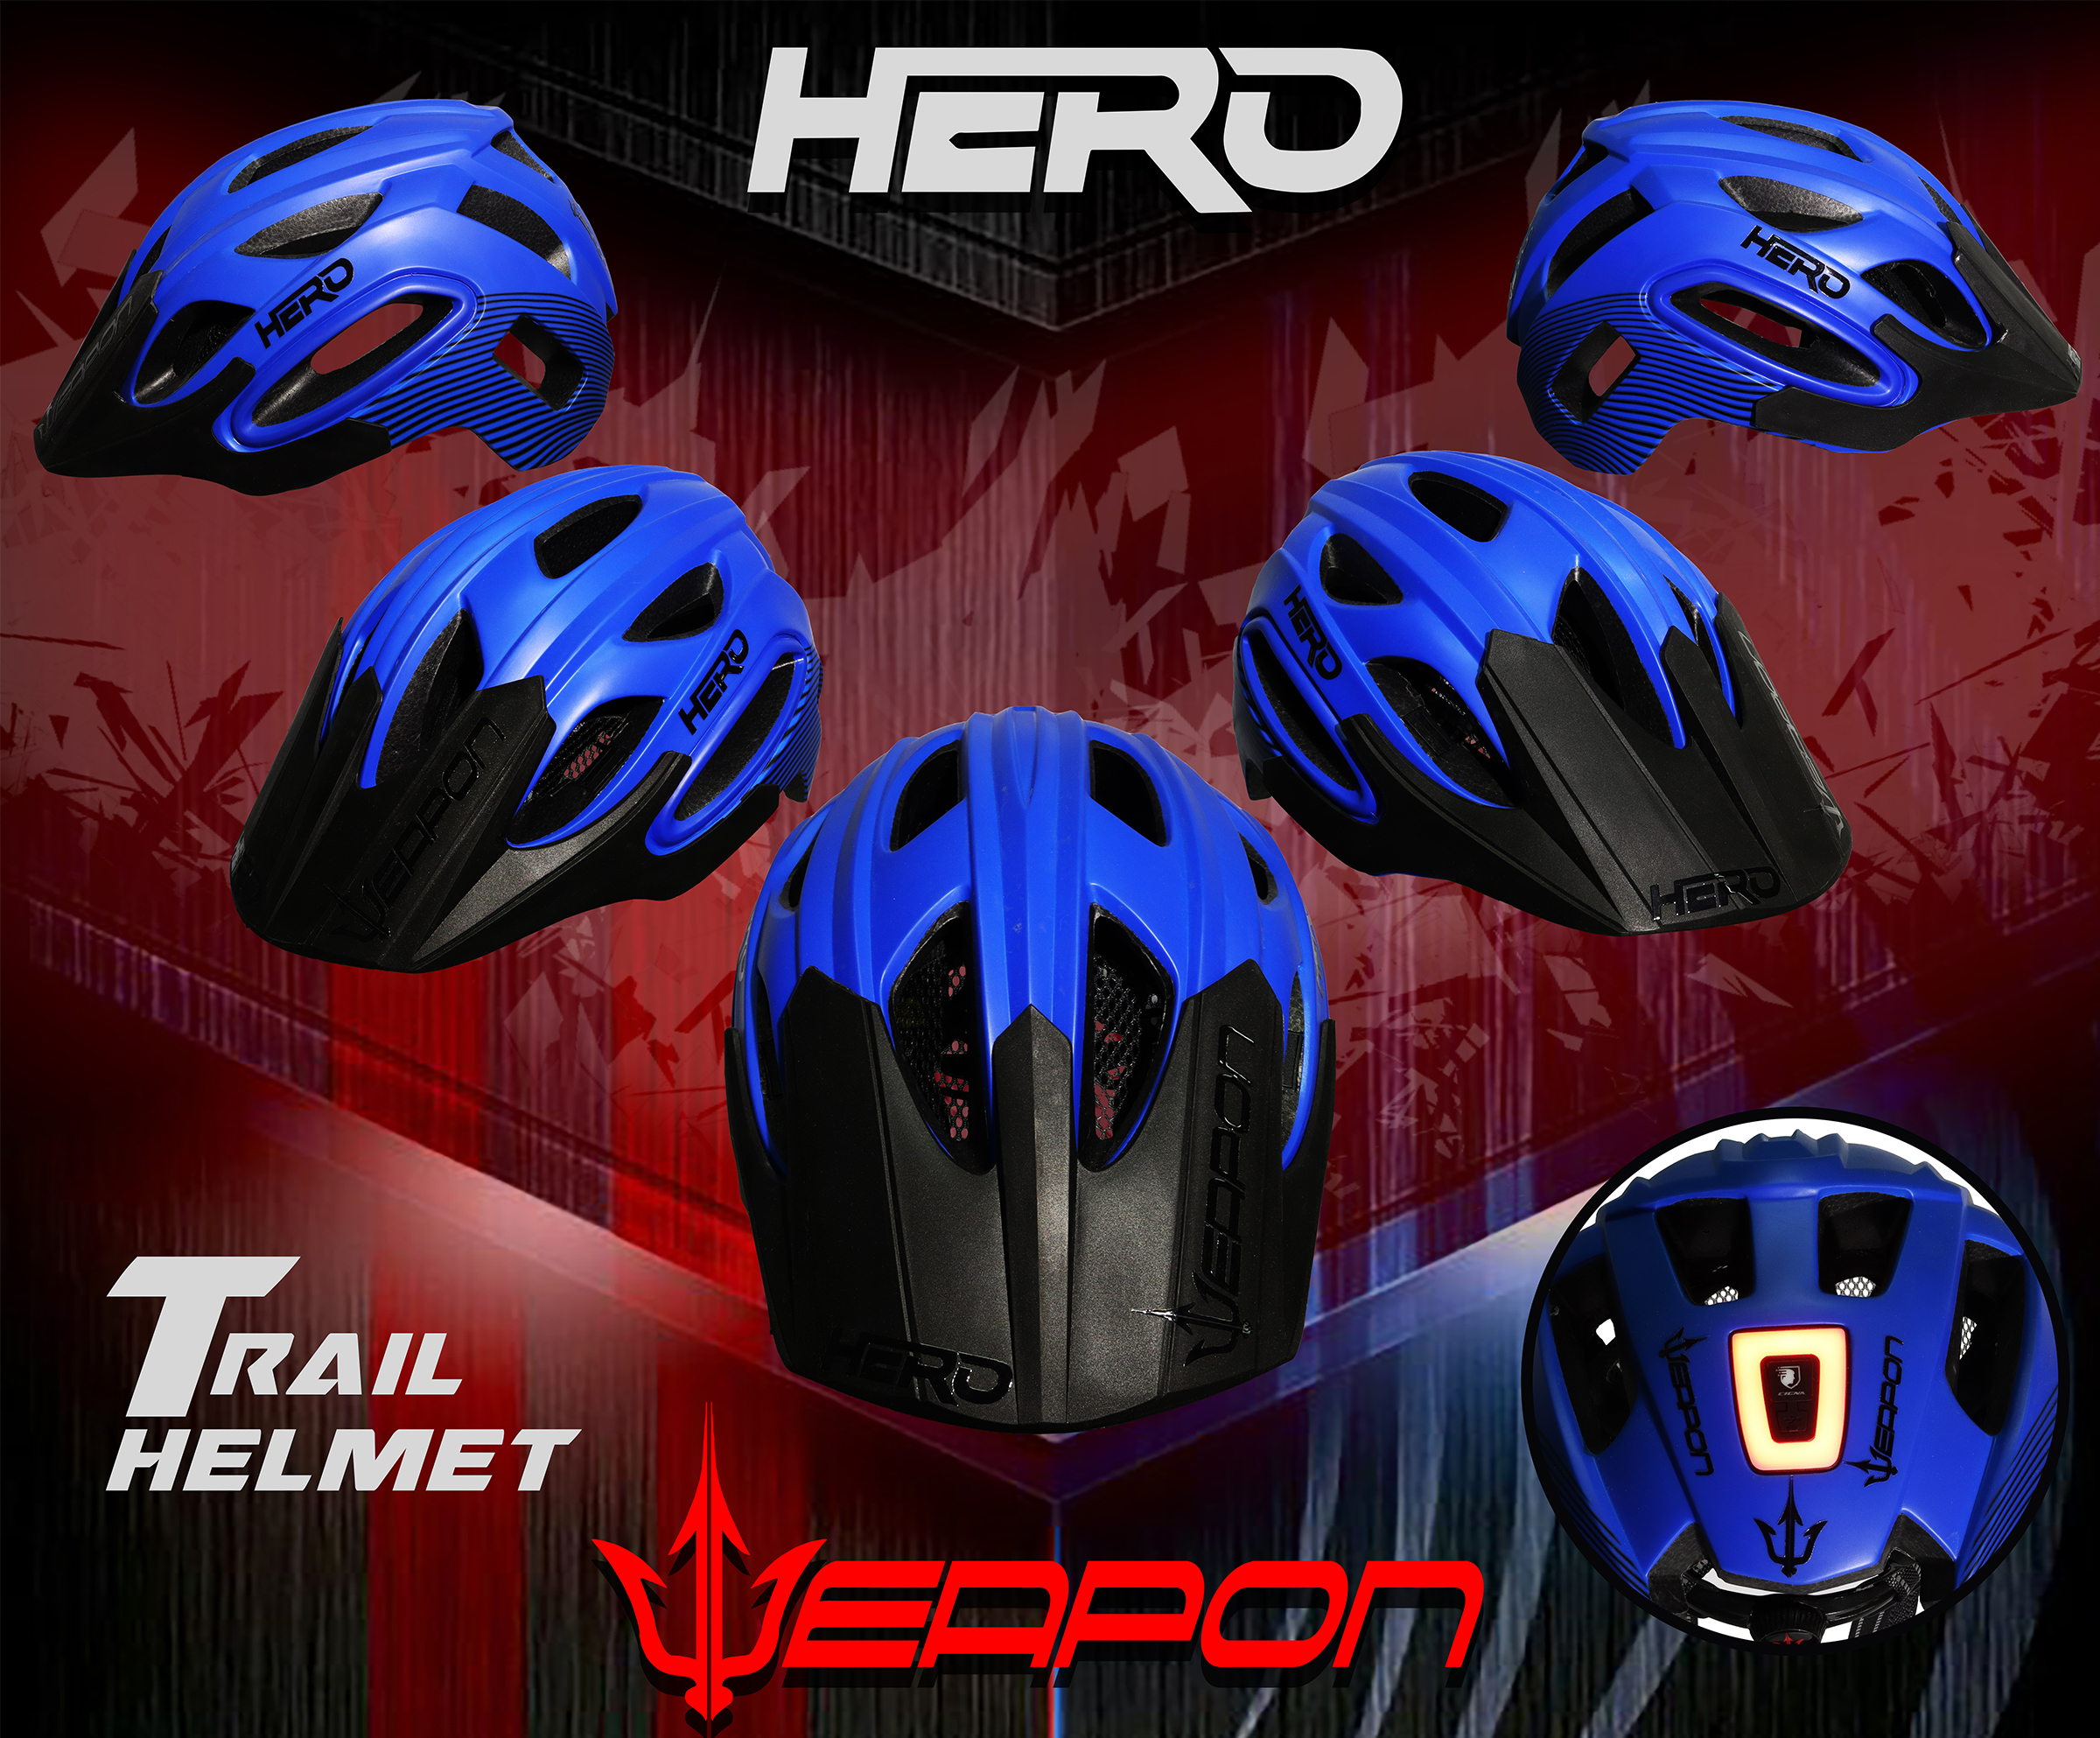 hero-helmet-ads6